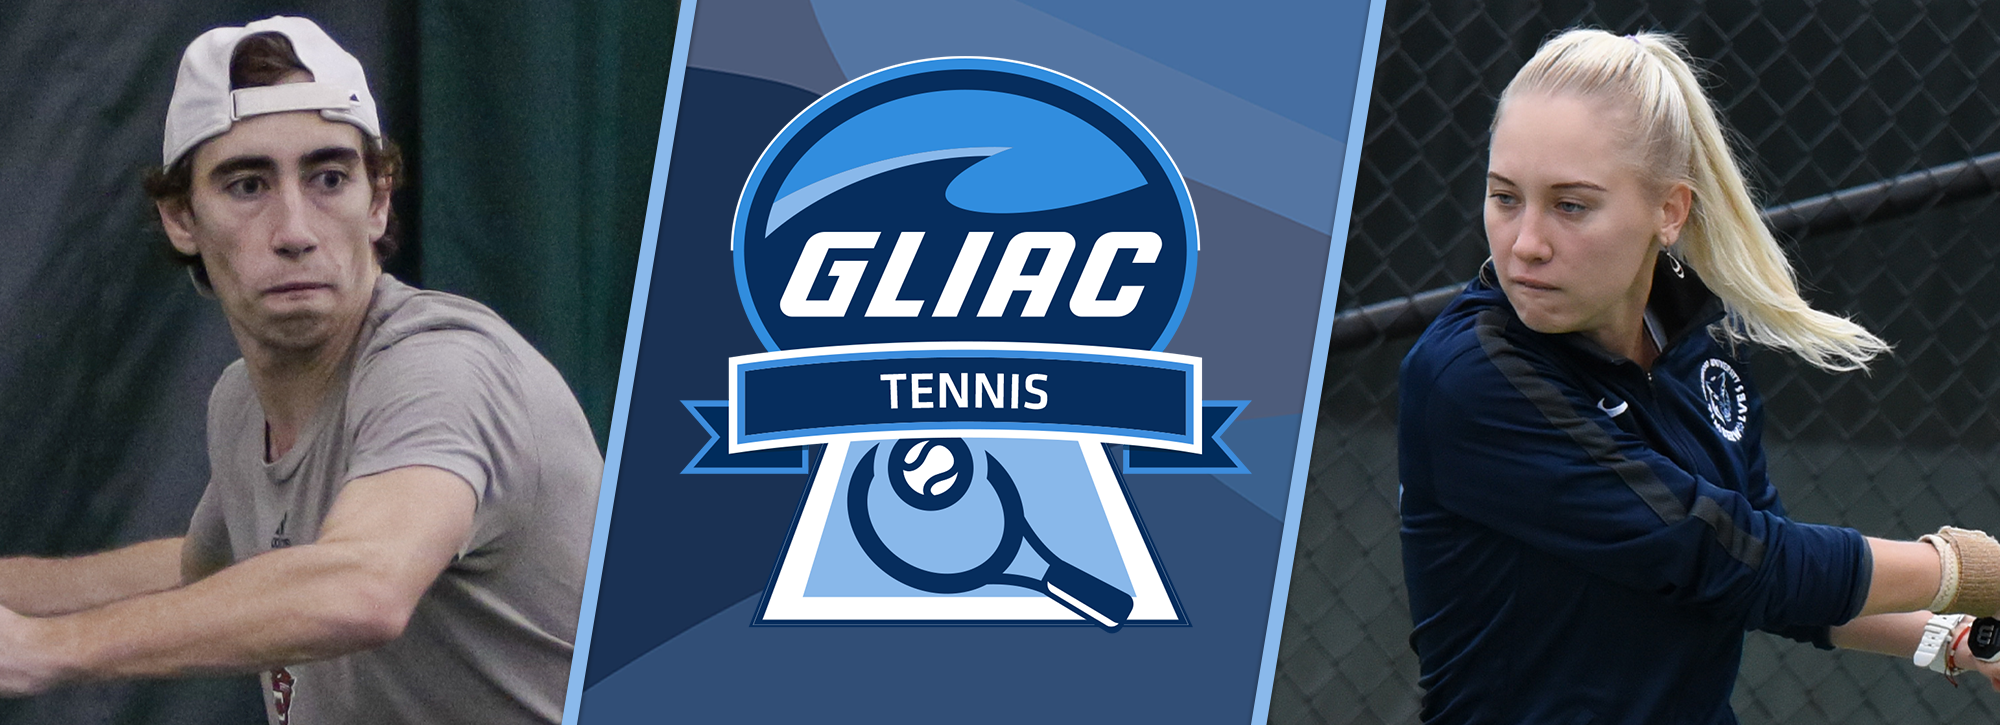 DU's Van Antwerpen and NU's Velichko receive GLIAC Tennis Player of the Week honors